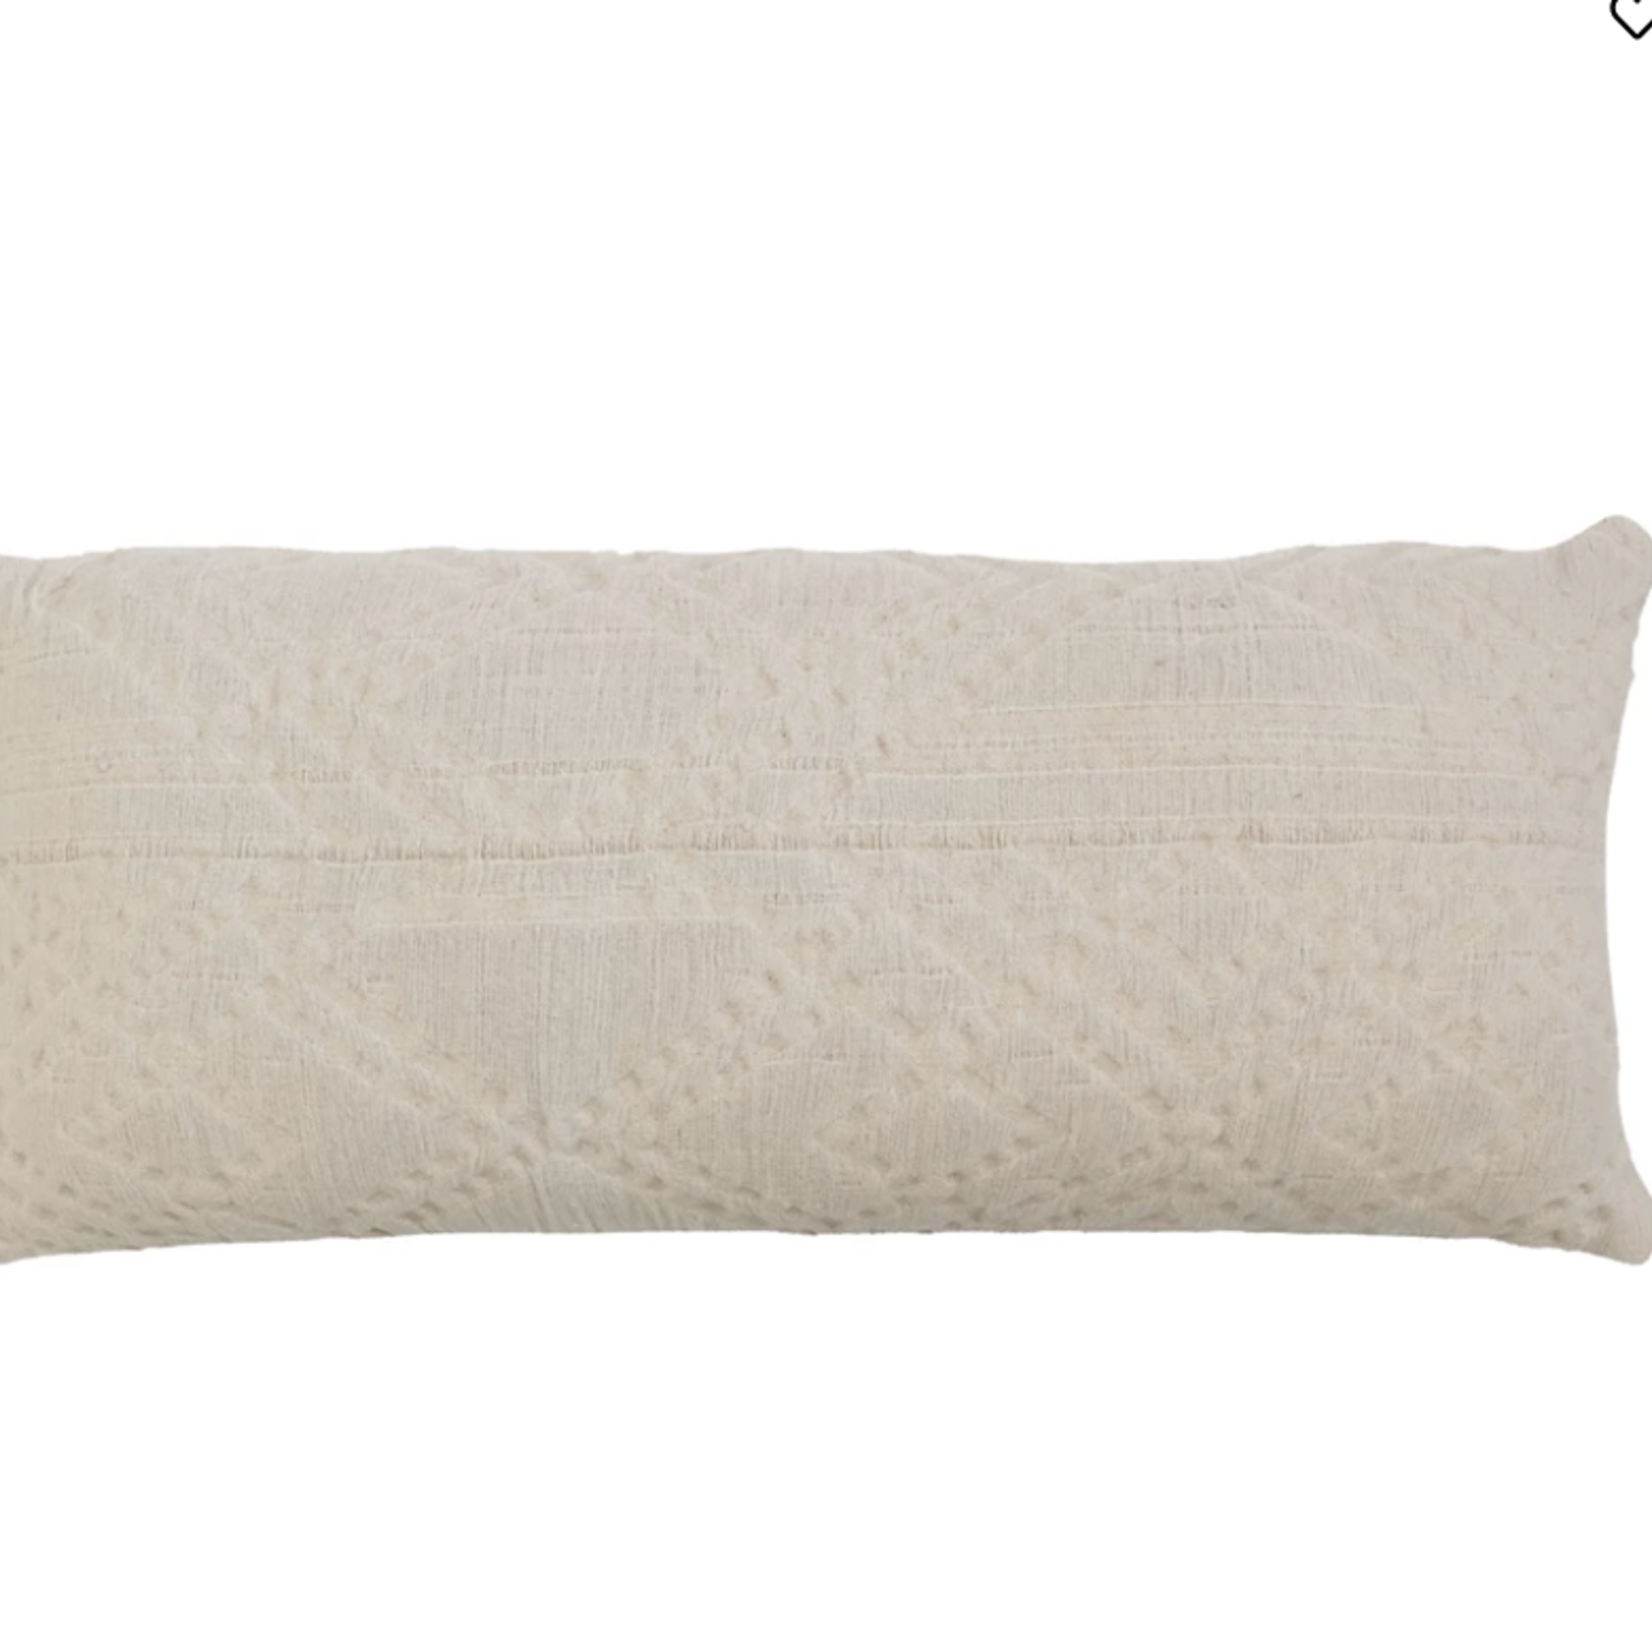 Creative Co-Op 36" x 16" Woven Cotton Jacquard Lumbar Pillow